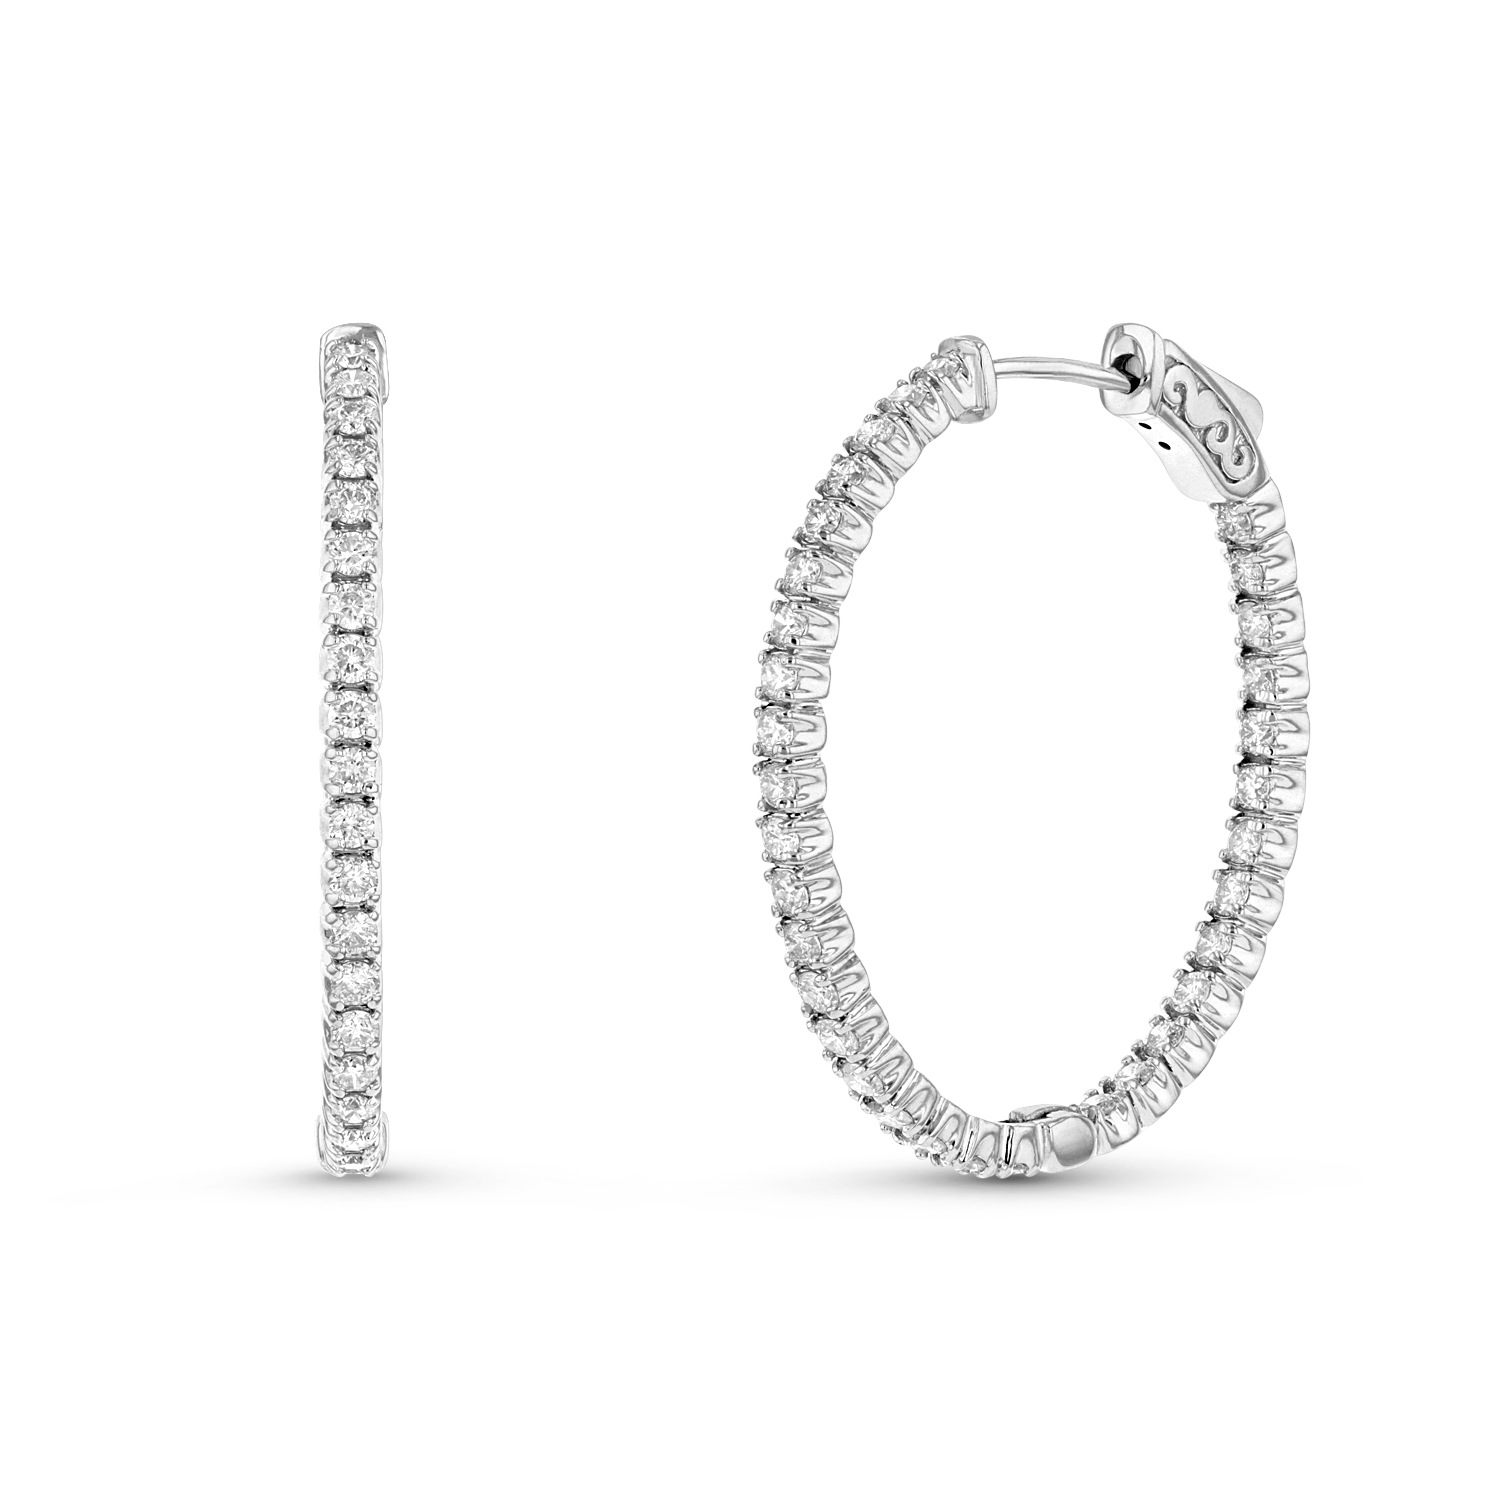 View 2.00ctw Diamond Hoop Earrings in 14k White Gold